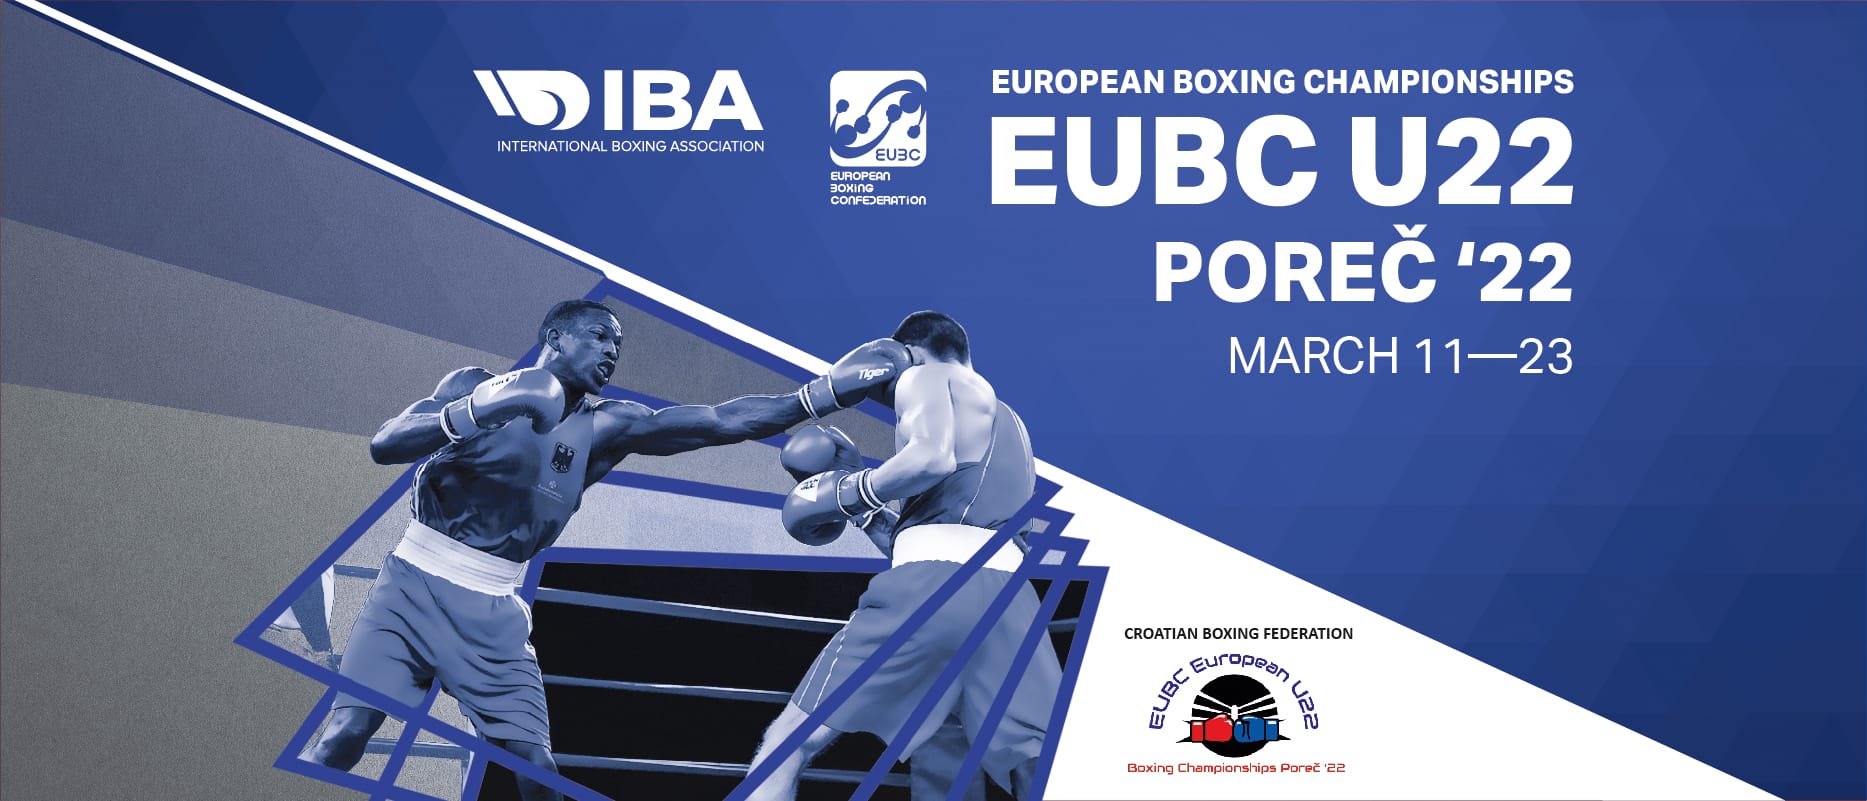 The EUBC U22 European Boxing Championships started in Porec – IBA